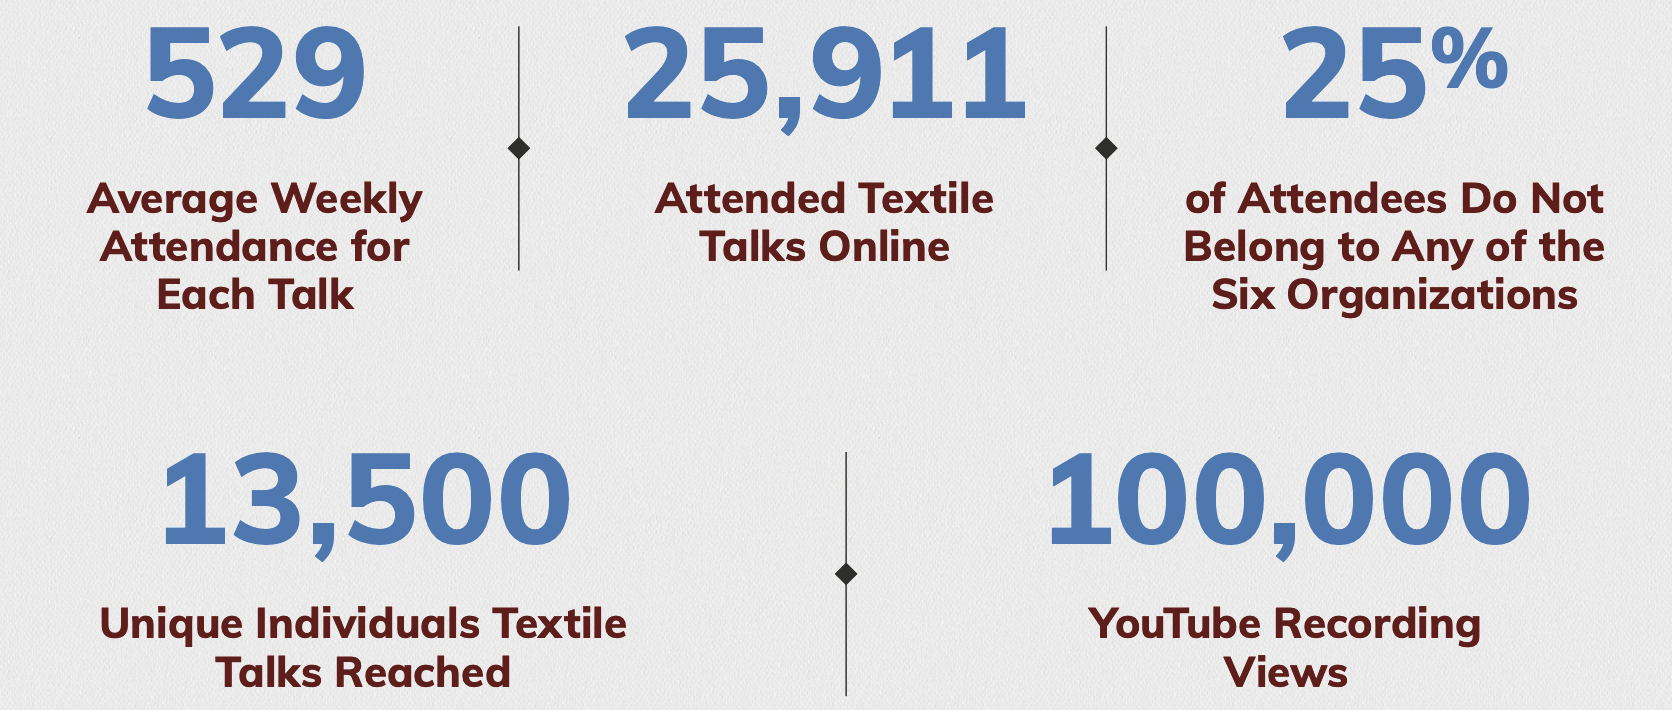 iqm-textile-stats.jpg